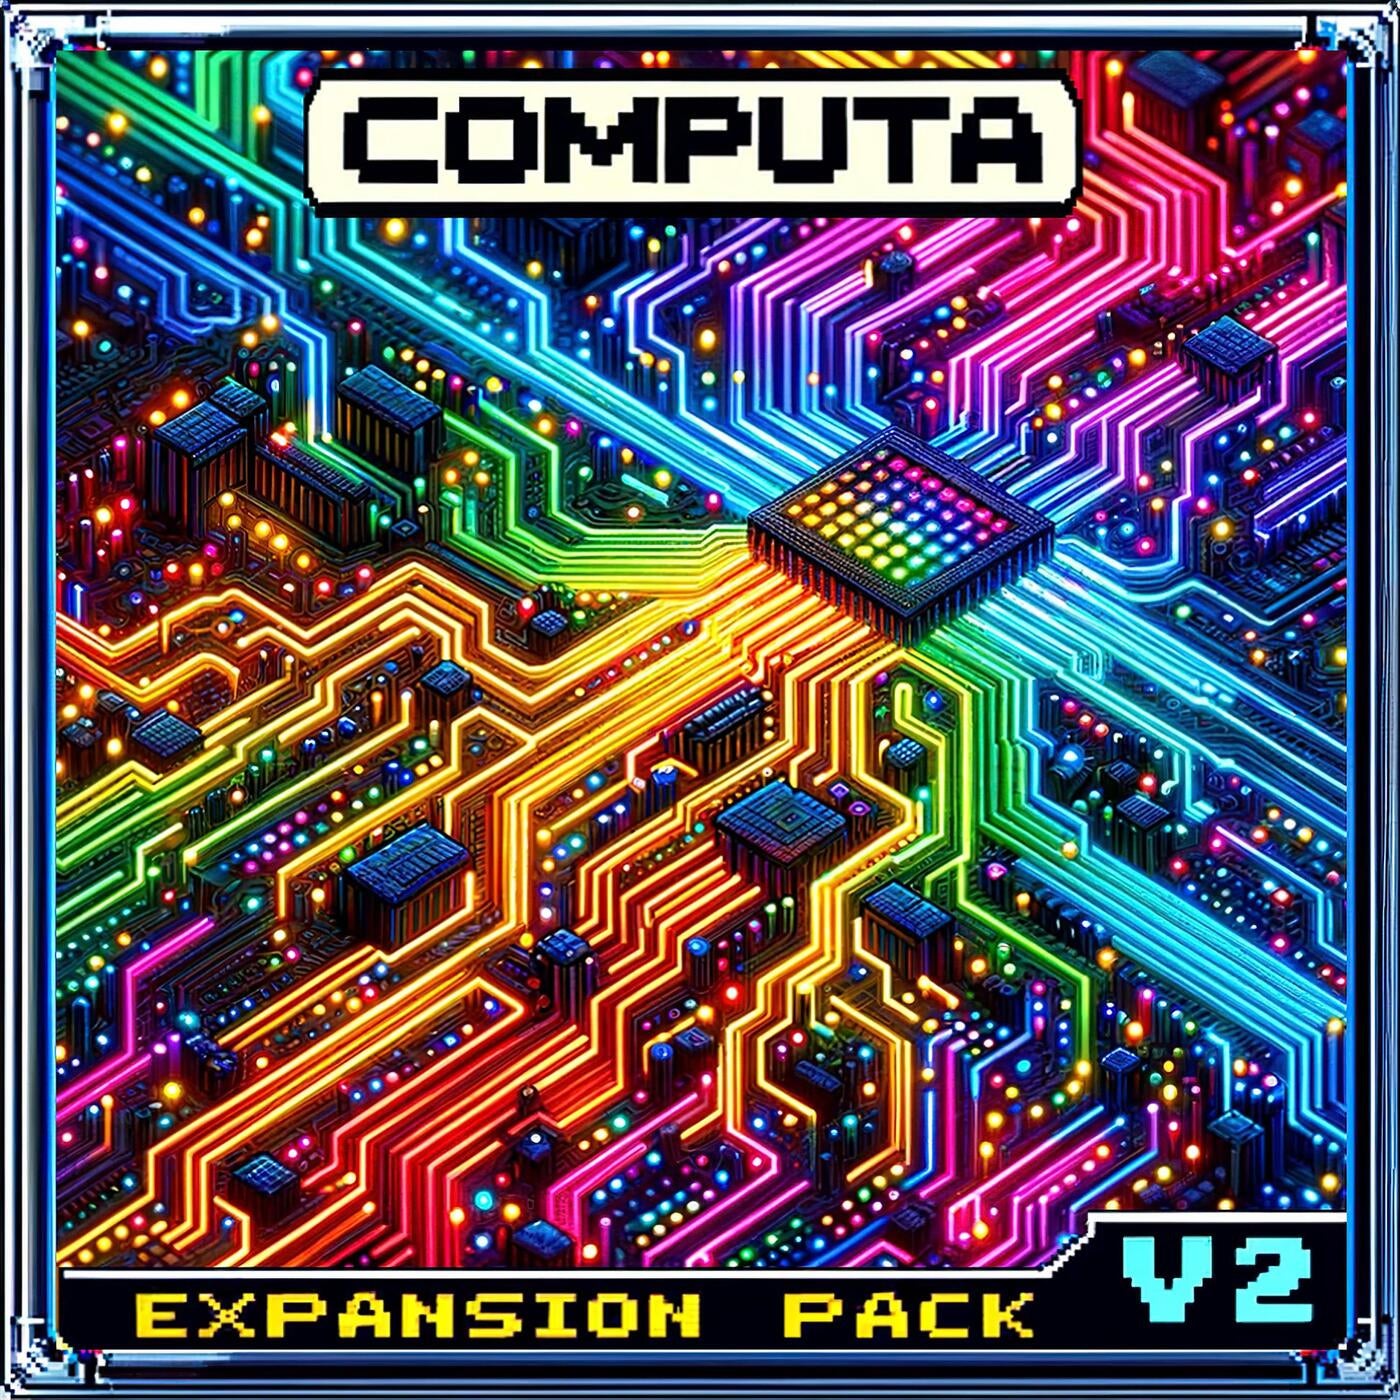 Expansion Pack v2